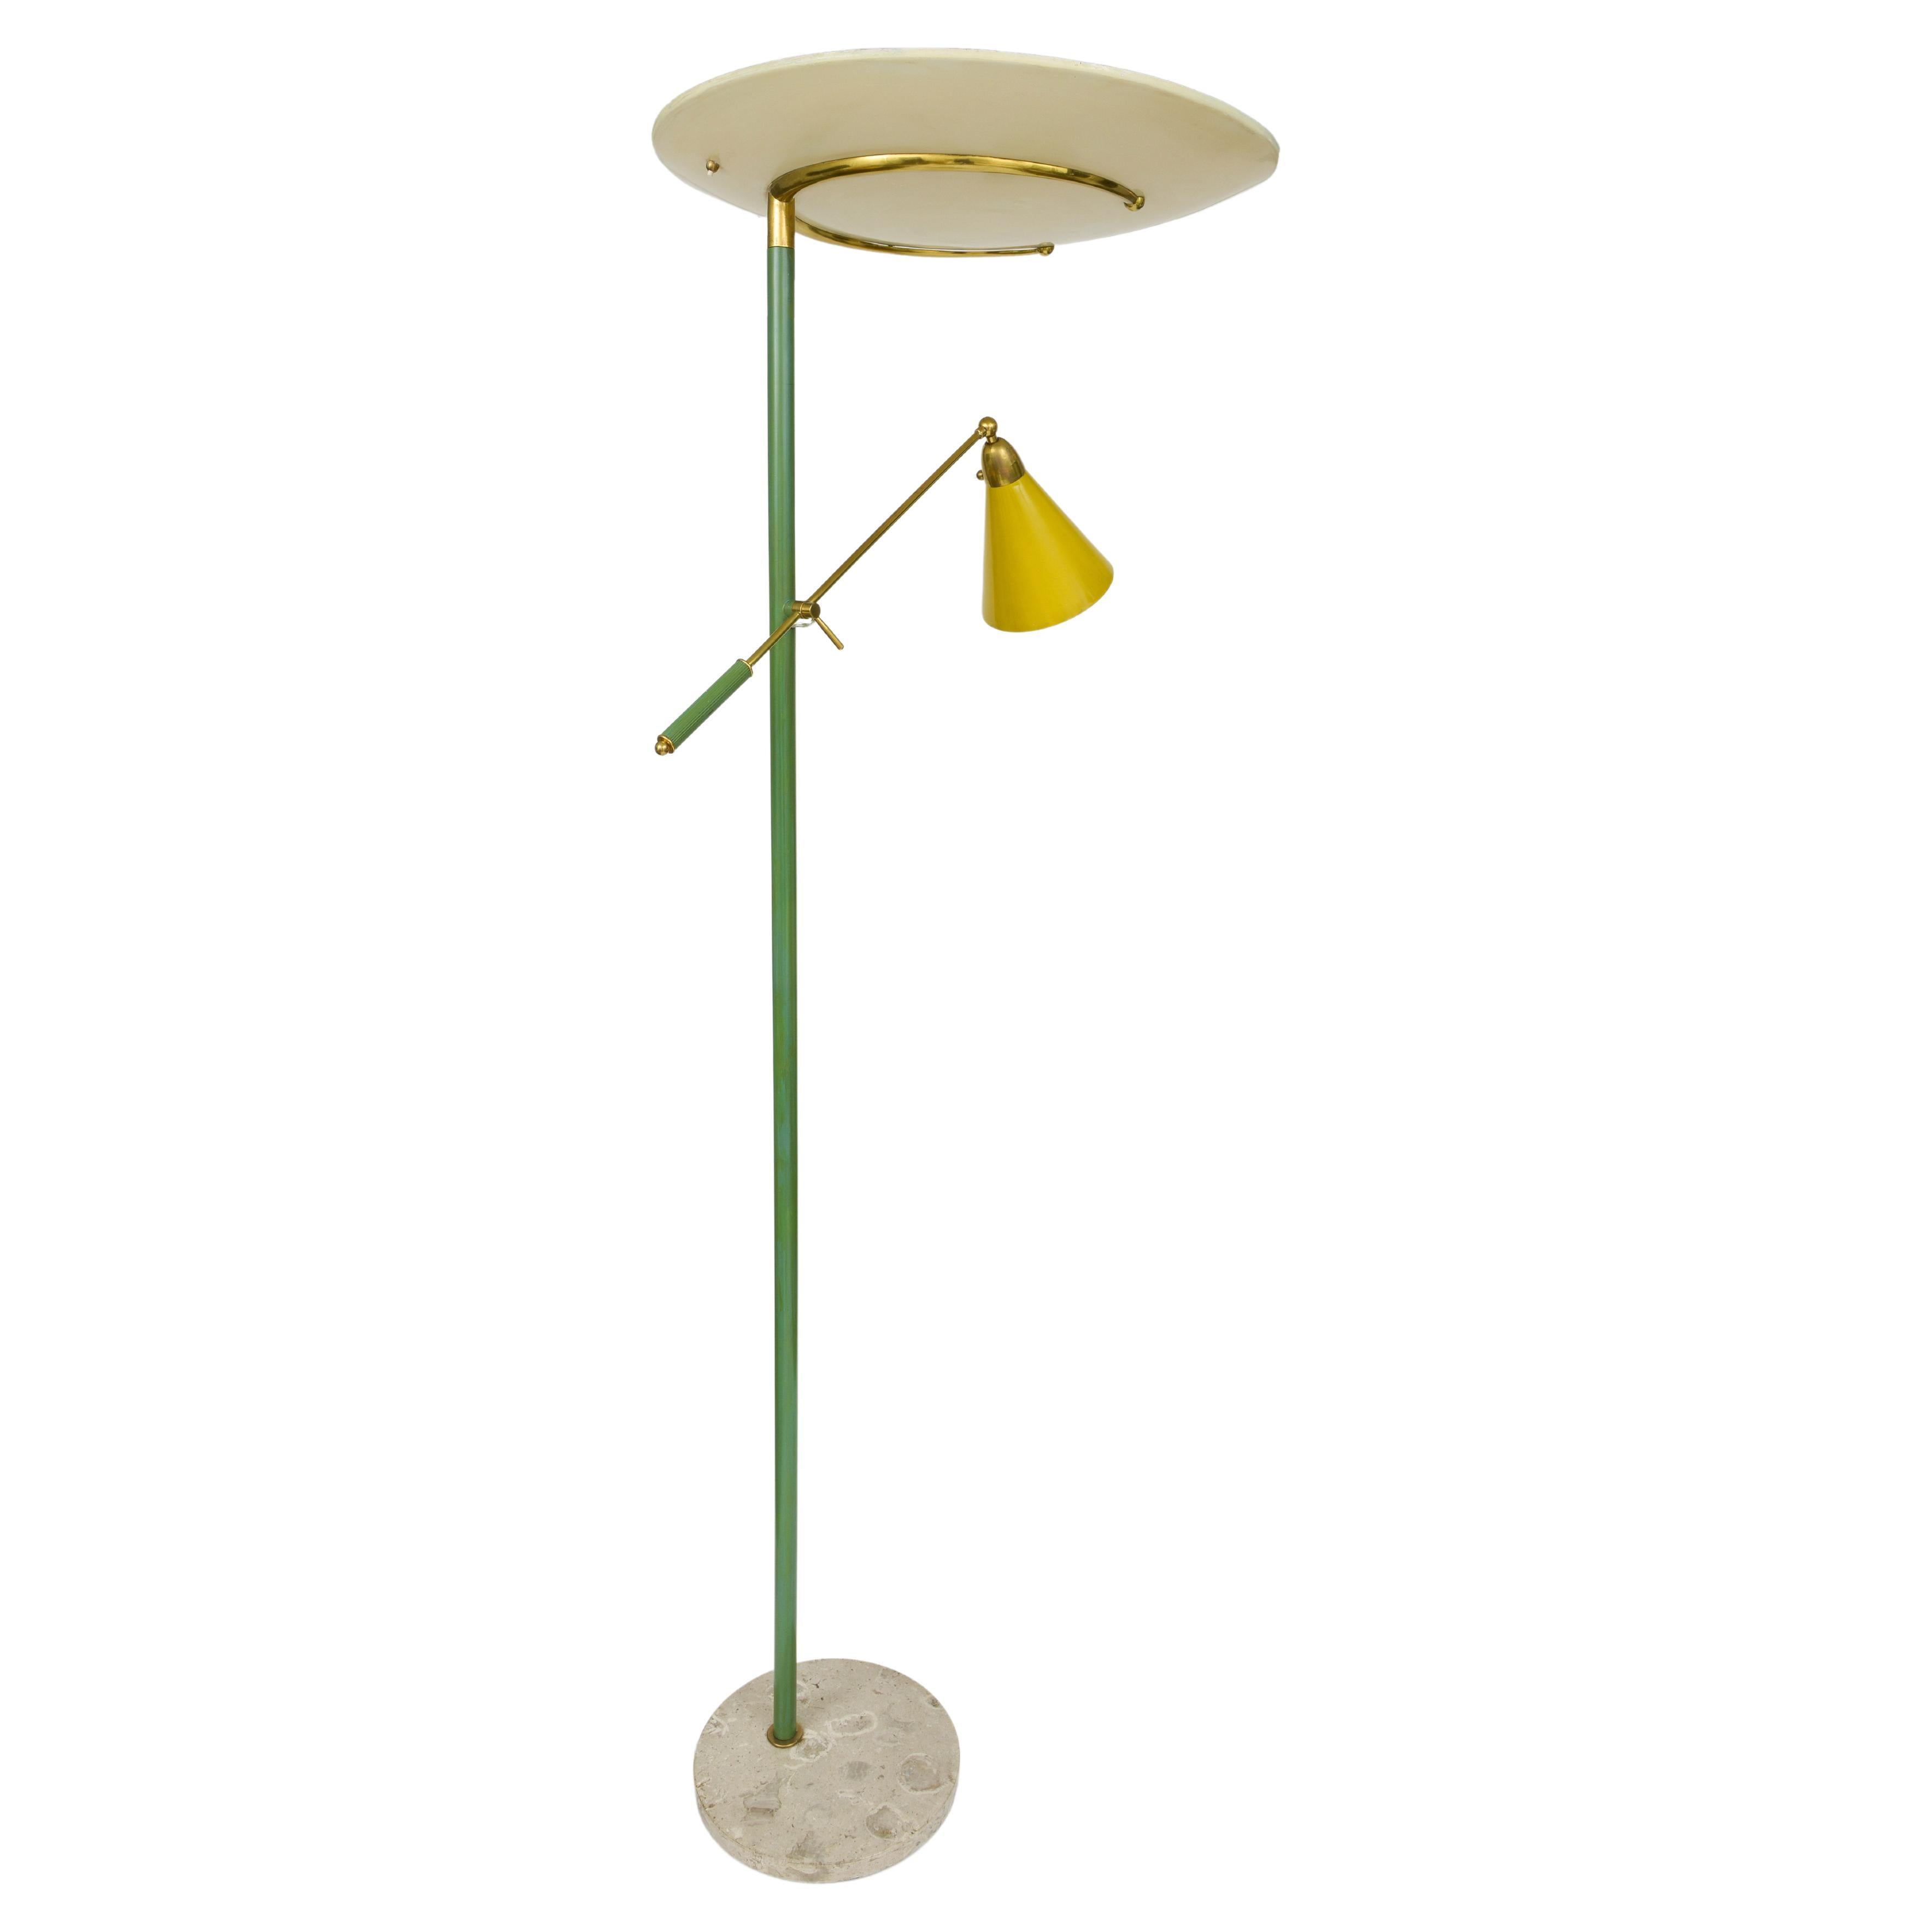 1960s Round beige marble base green enameled stem adjustable arm floor lamp